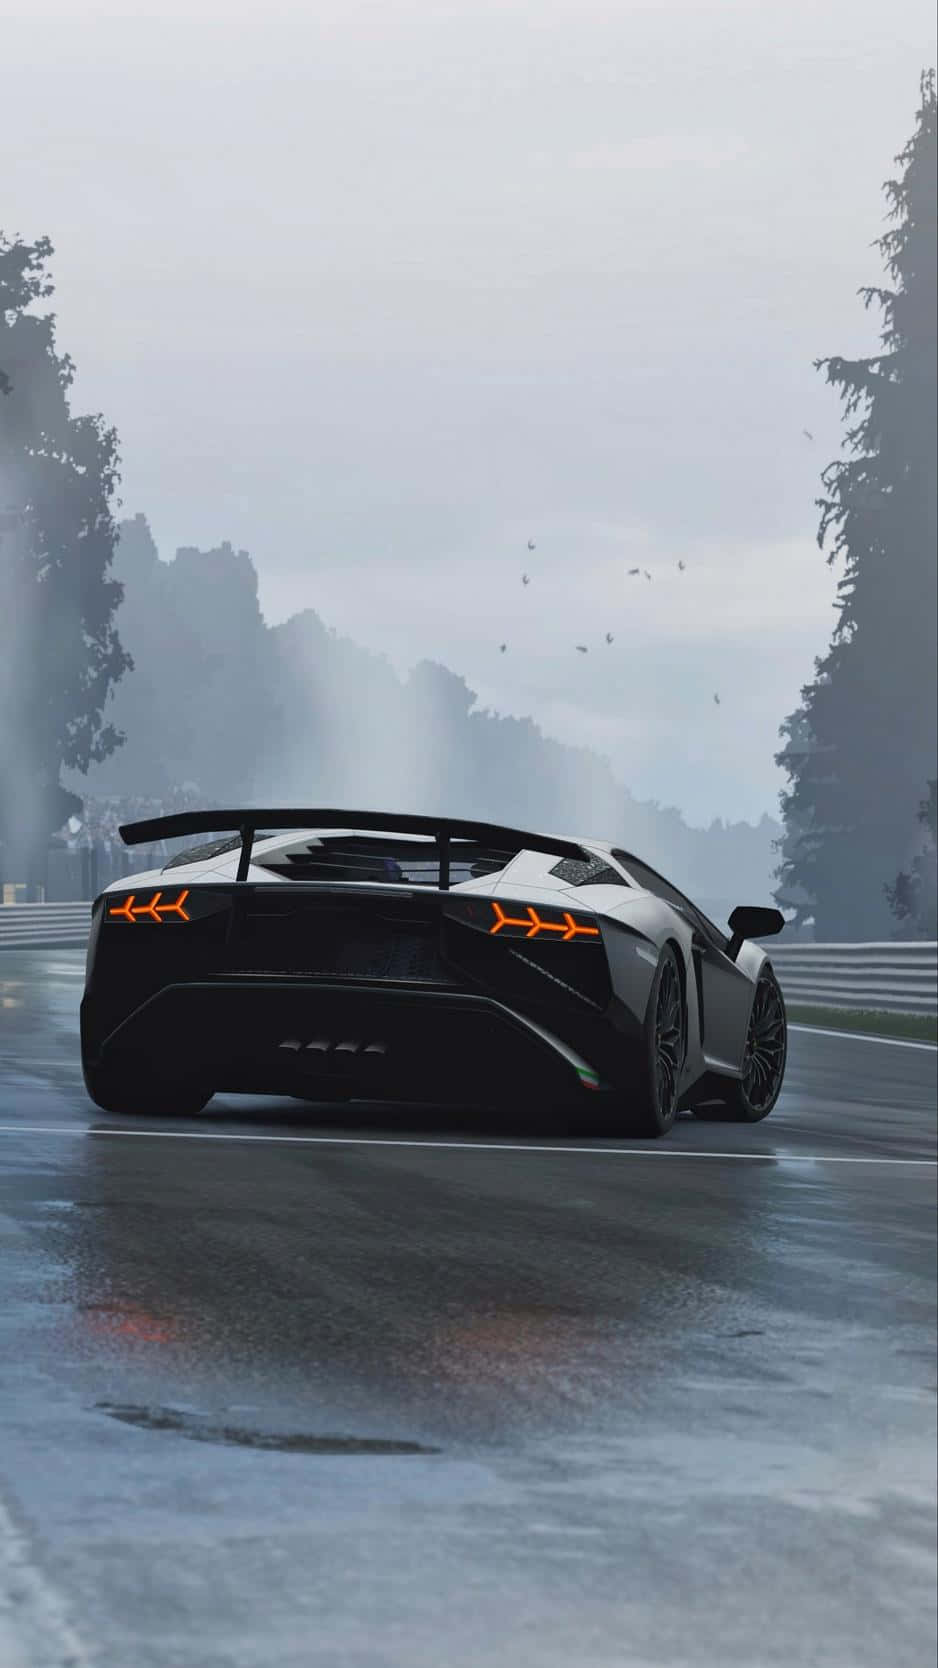 A black Lamborghini shines in the sun, ready to hit the roads in style Wallpaper